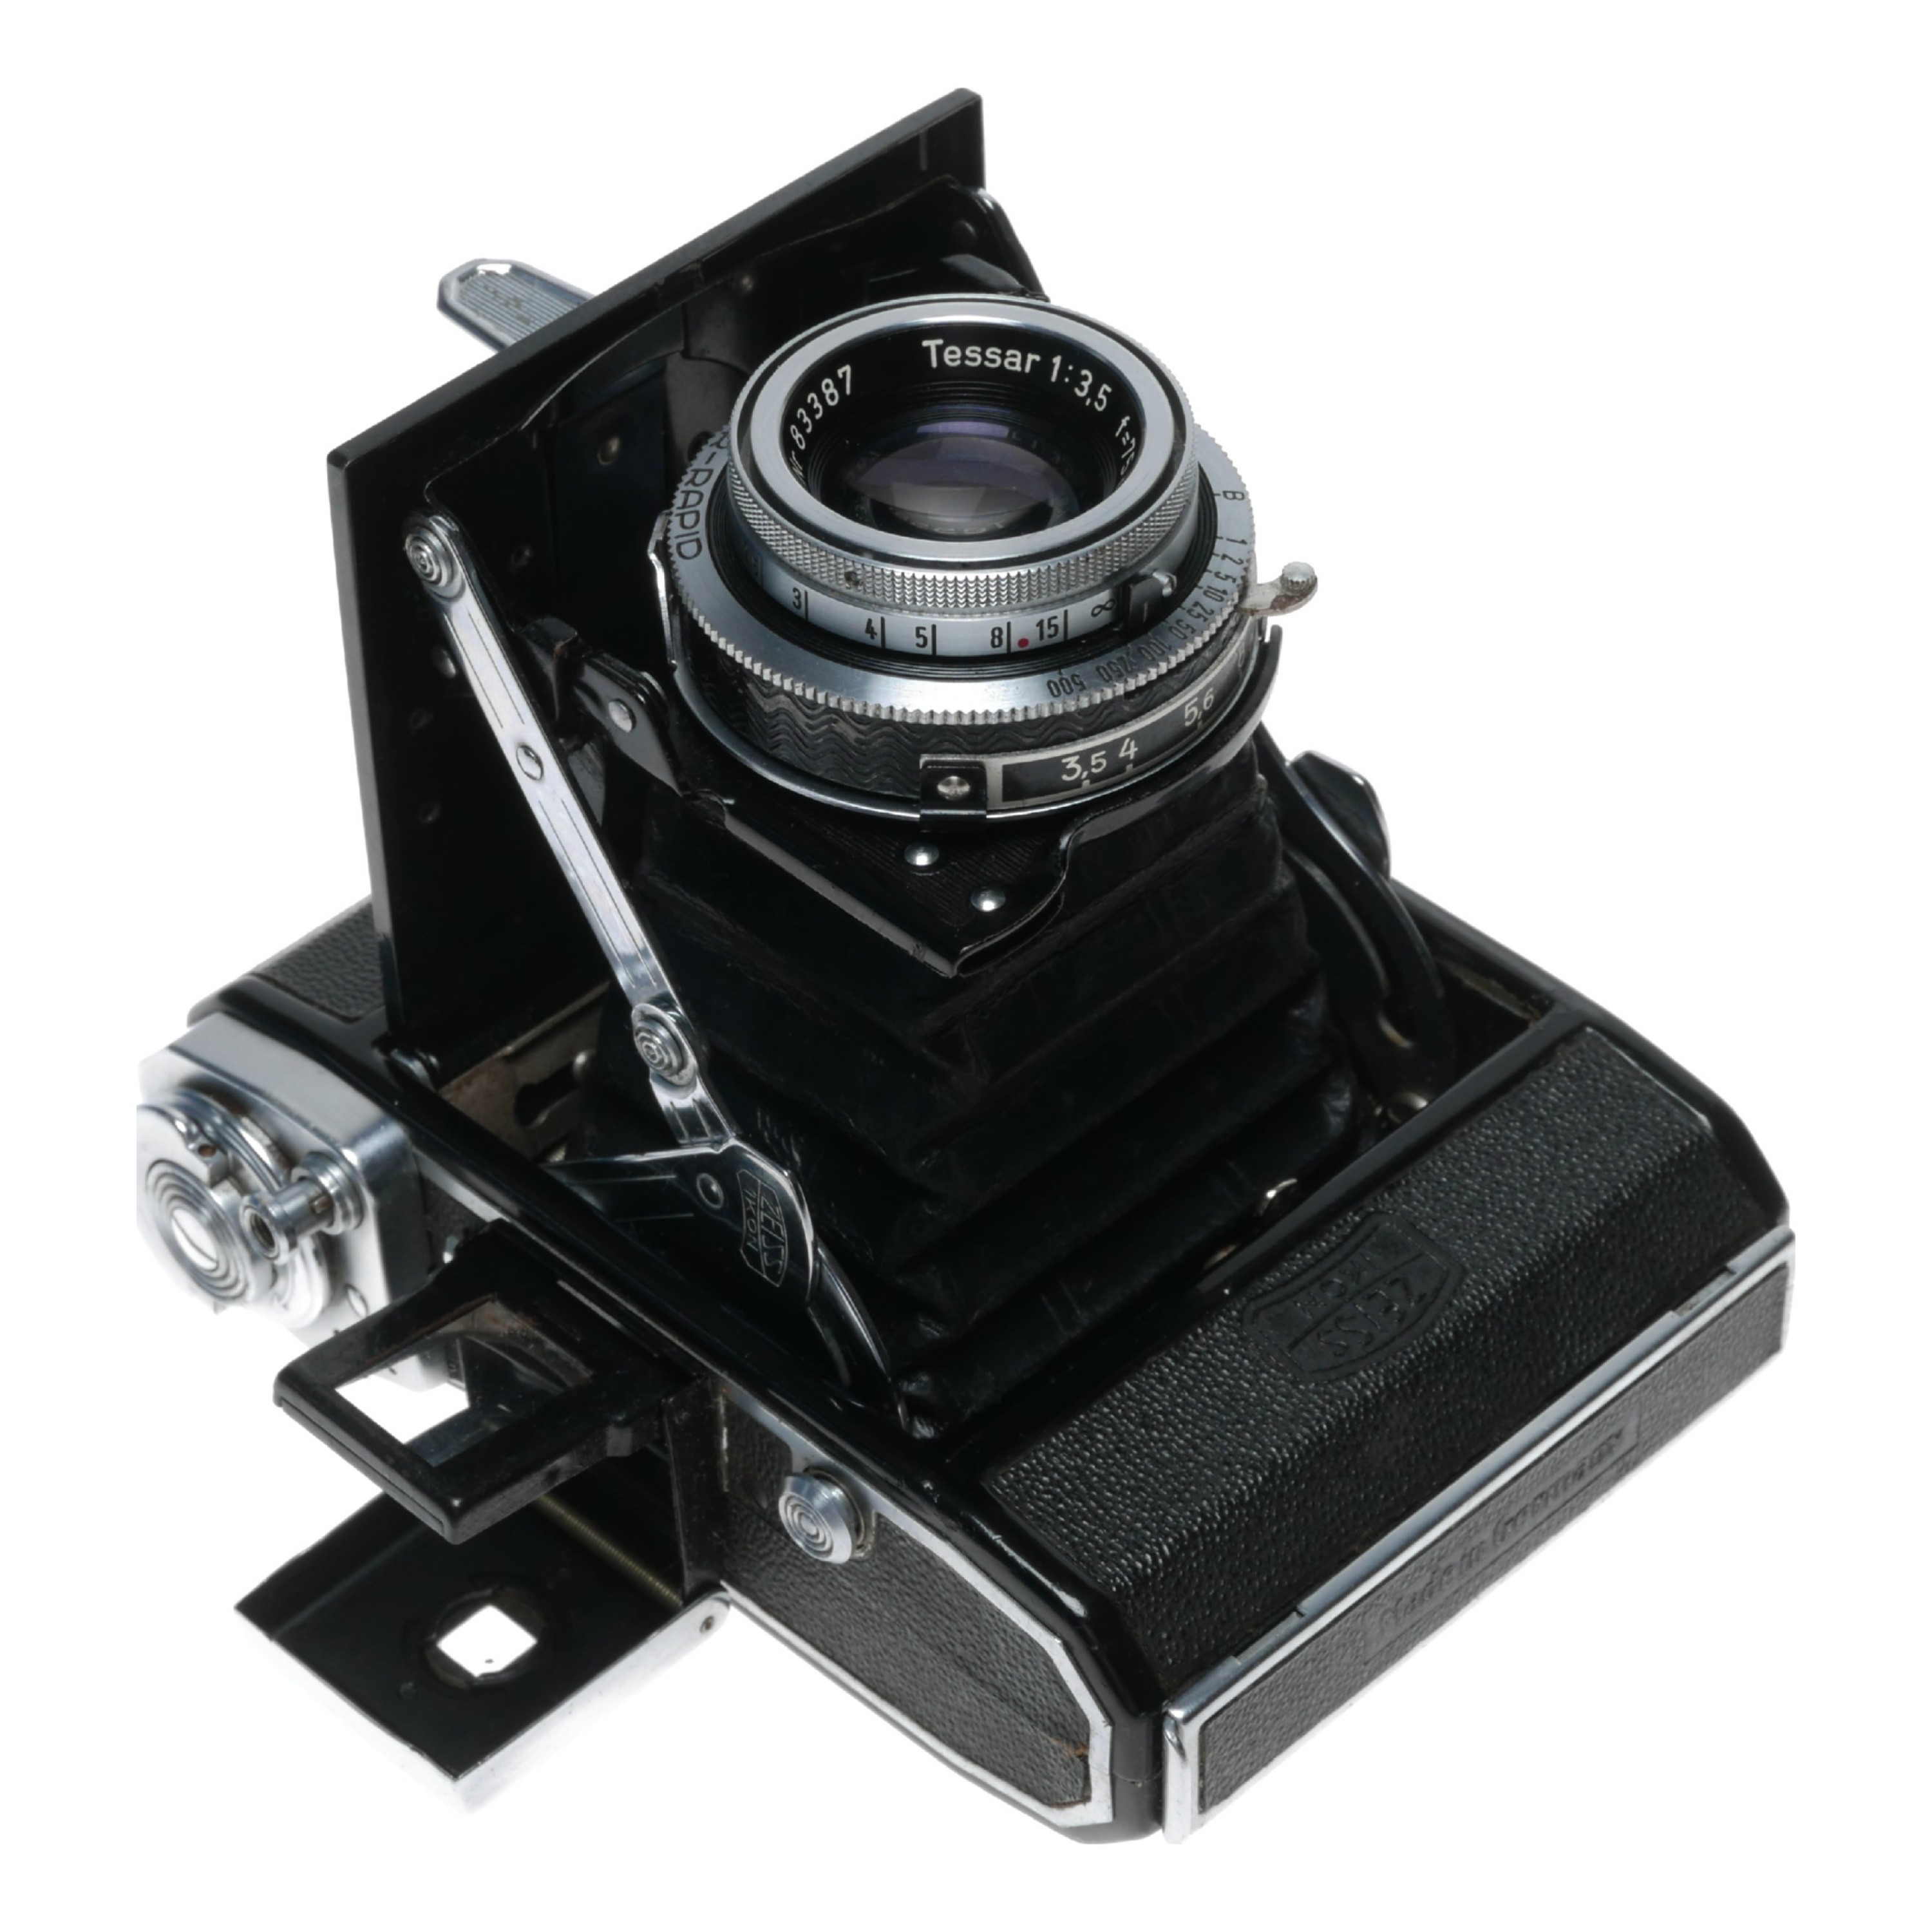 Zeiss Ikon Ikonta A 521 Vertical Folding Camera Opton Tessar 1:3.5 fu003d75mm